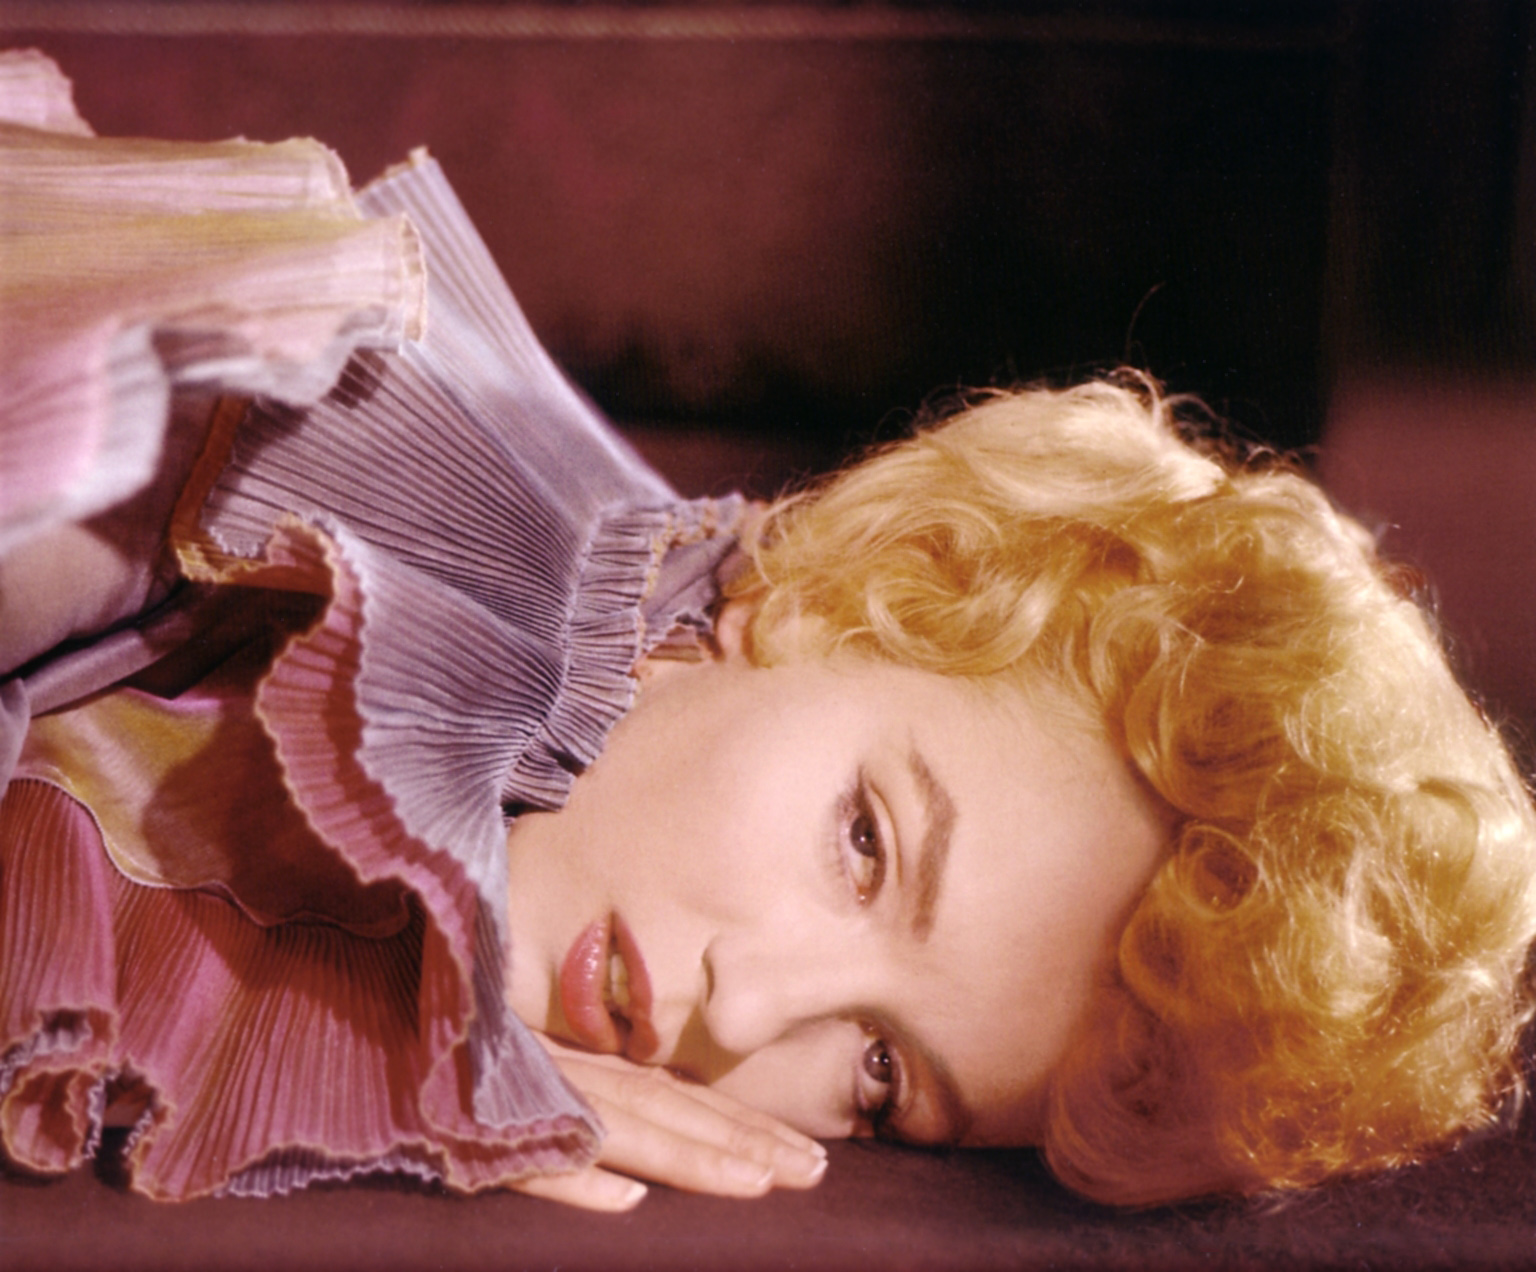 http://4.bp.blogspot.com/_-wlW5BxRhqg/THhHlrDvmrI/AAAAAAAABQ8/wrlvZAZoO0w/s1600/Annex+-+Monroe,+Marilyn+%28Prince+and+the+Showgirl,+The%29_05.jpg